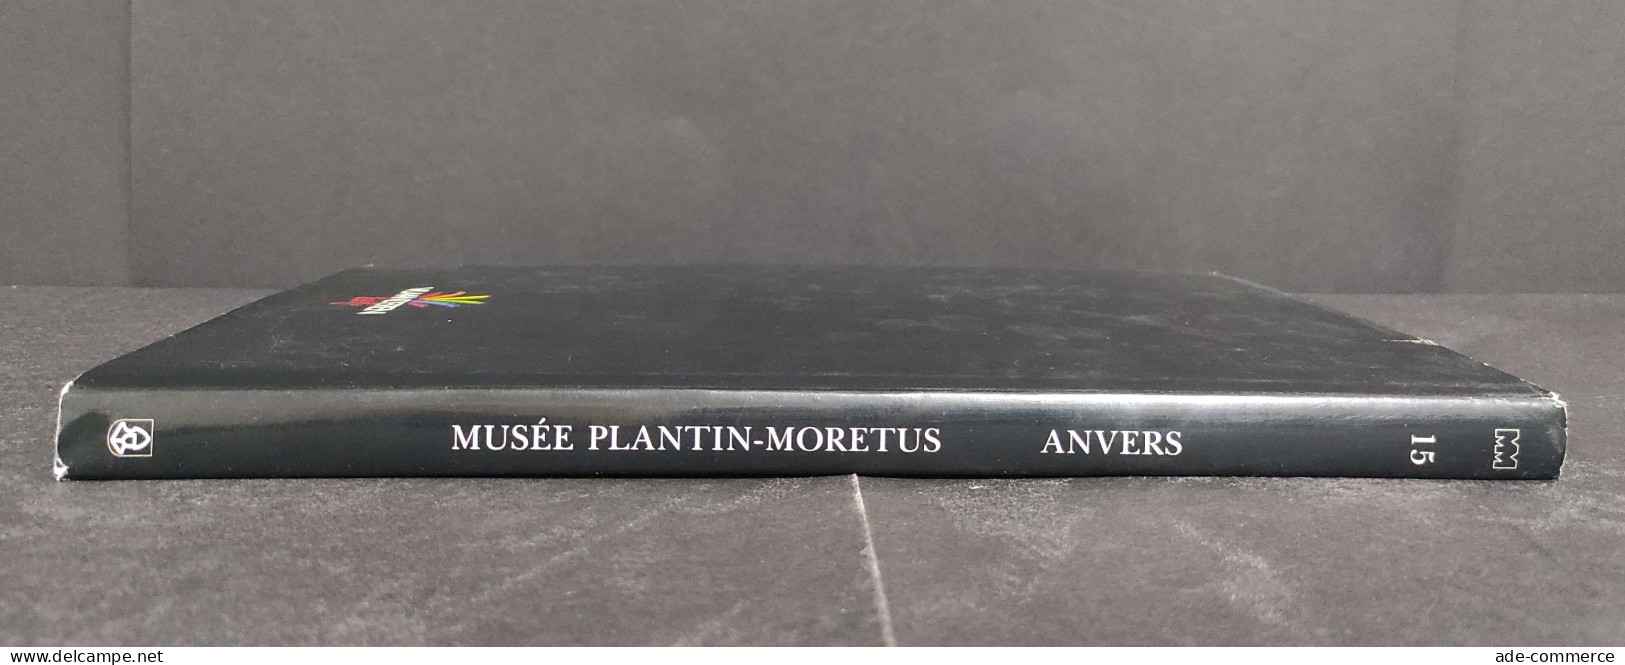 Musee Platin-Moretus - Anvers - F. Nave - L. Voet - 1989 - Arts, Antiquités